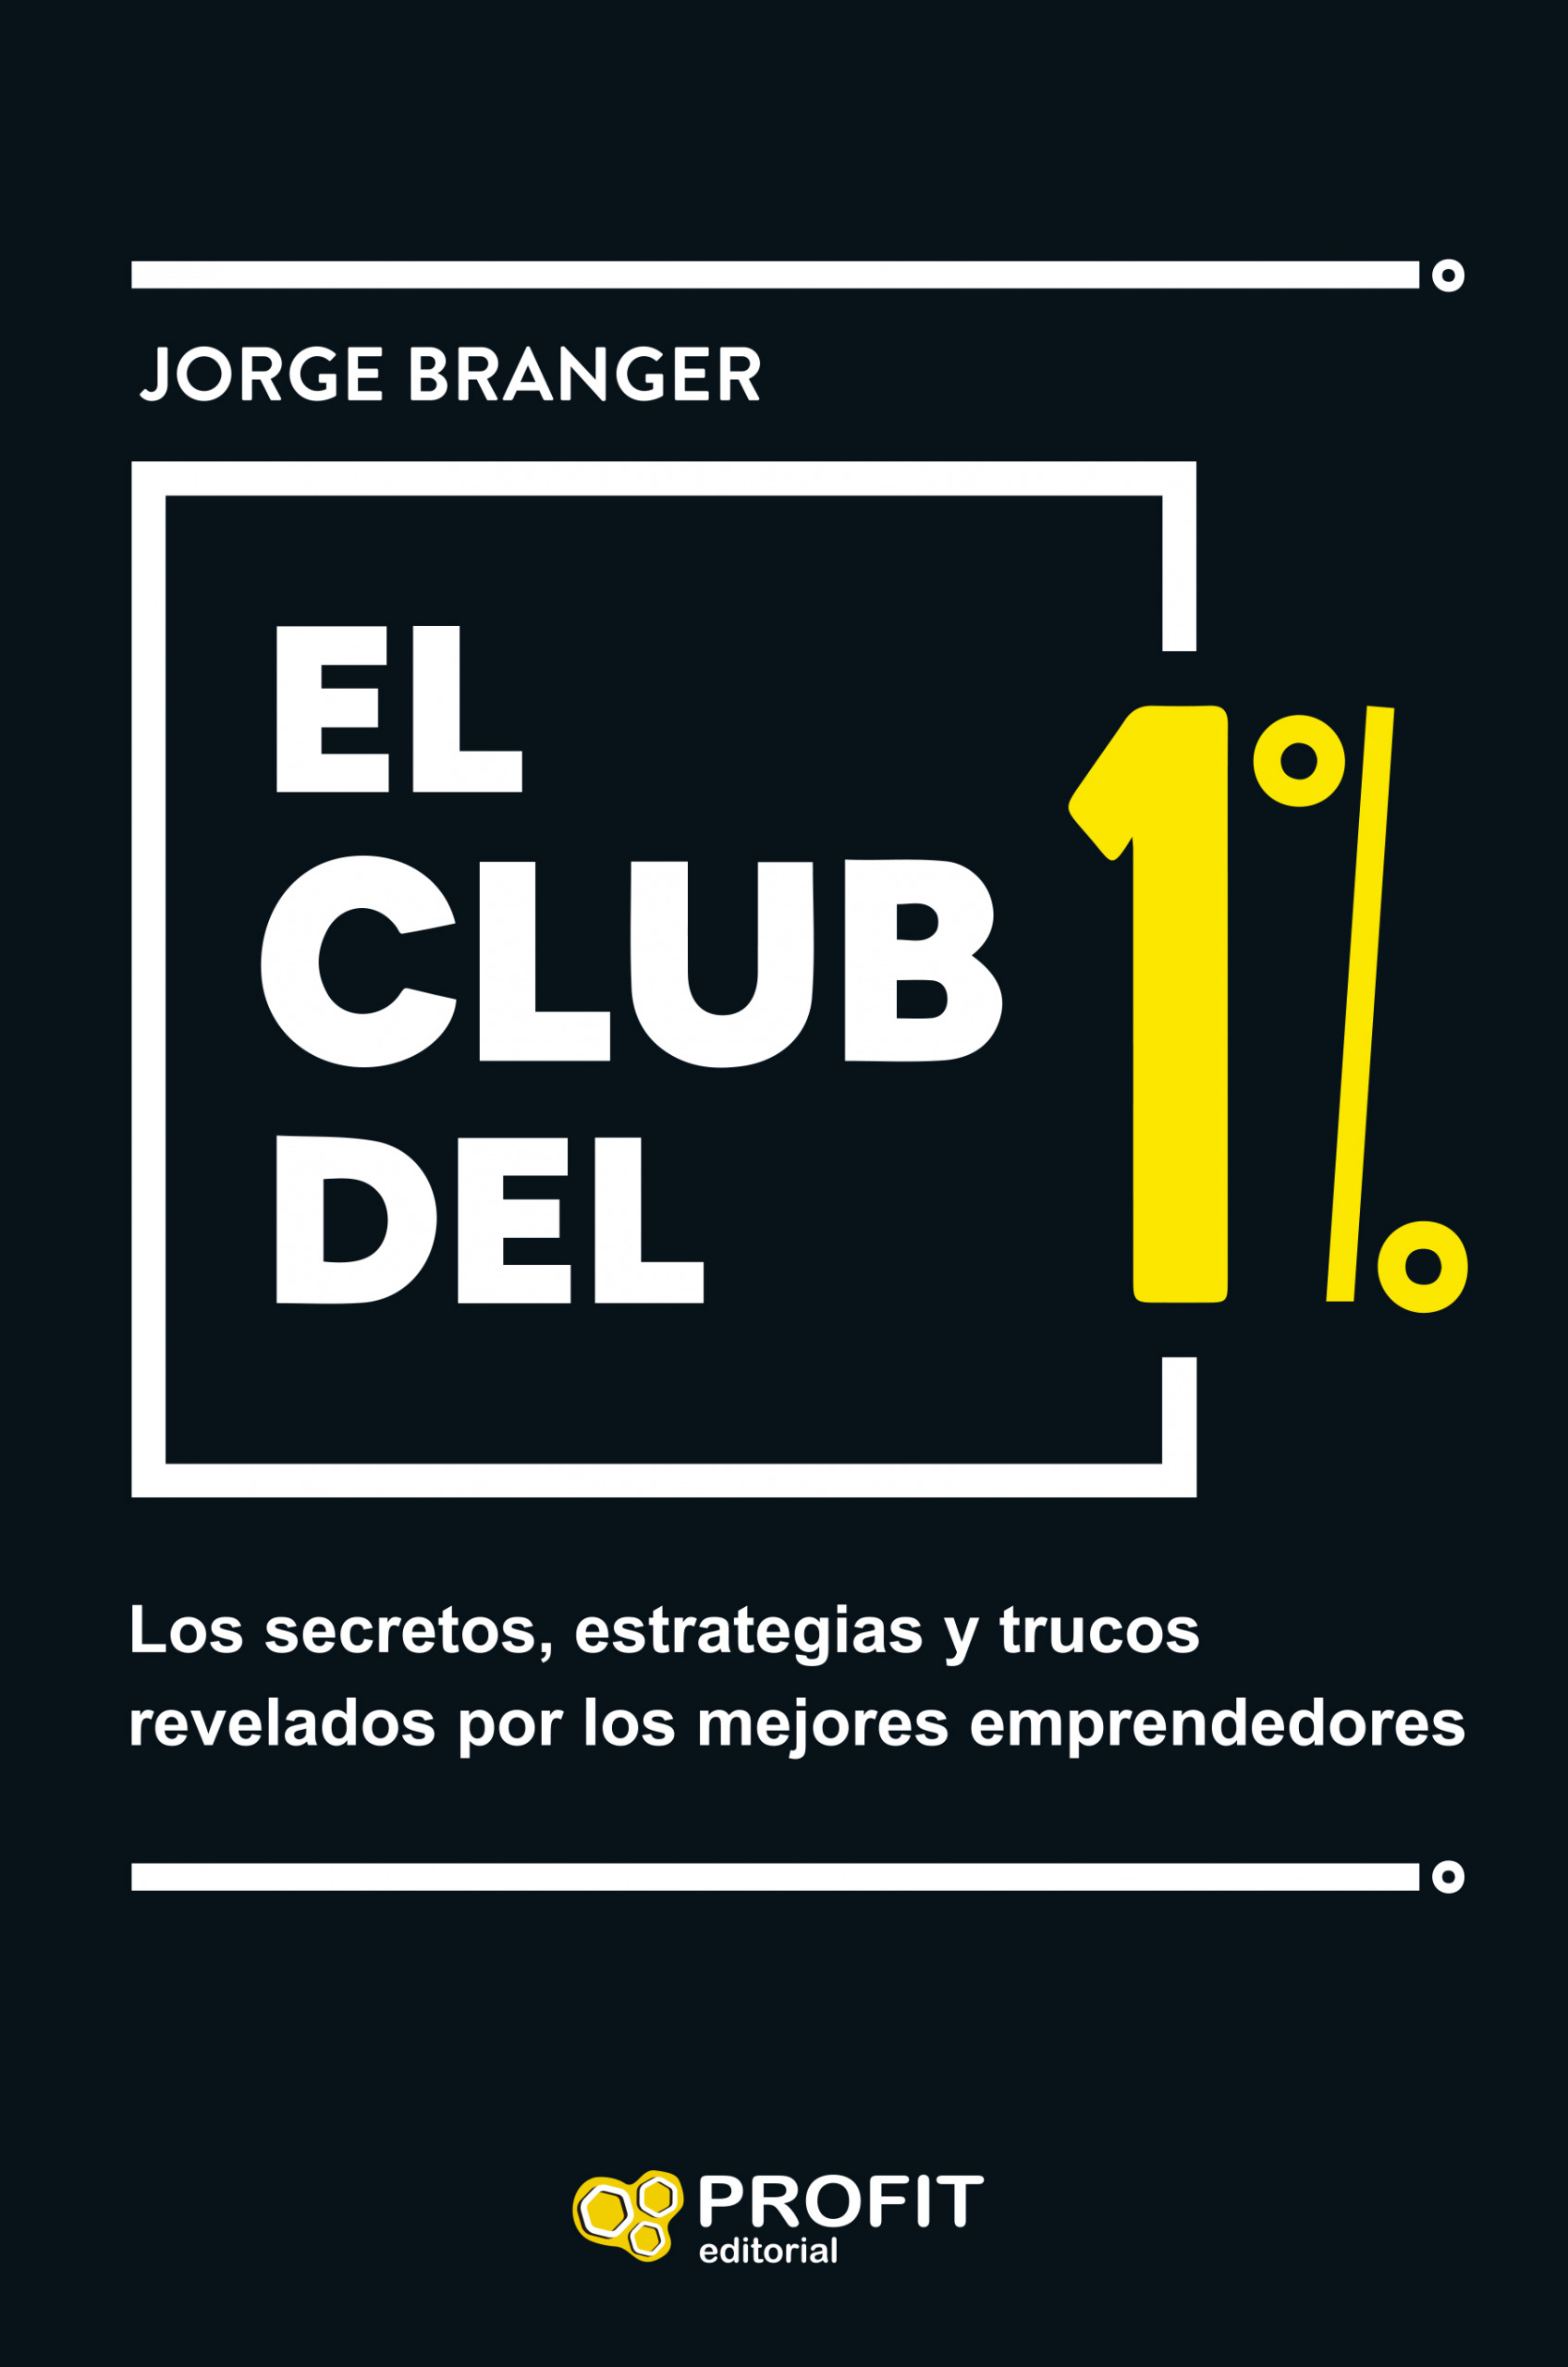 El club del 1%